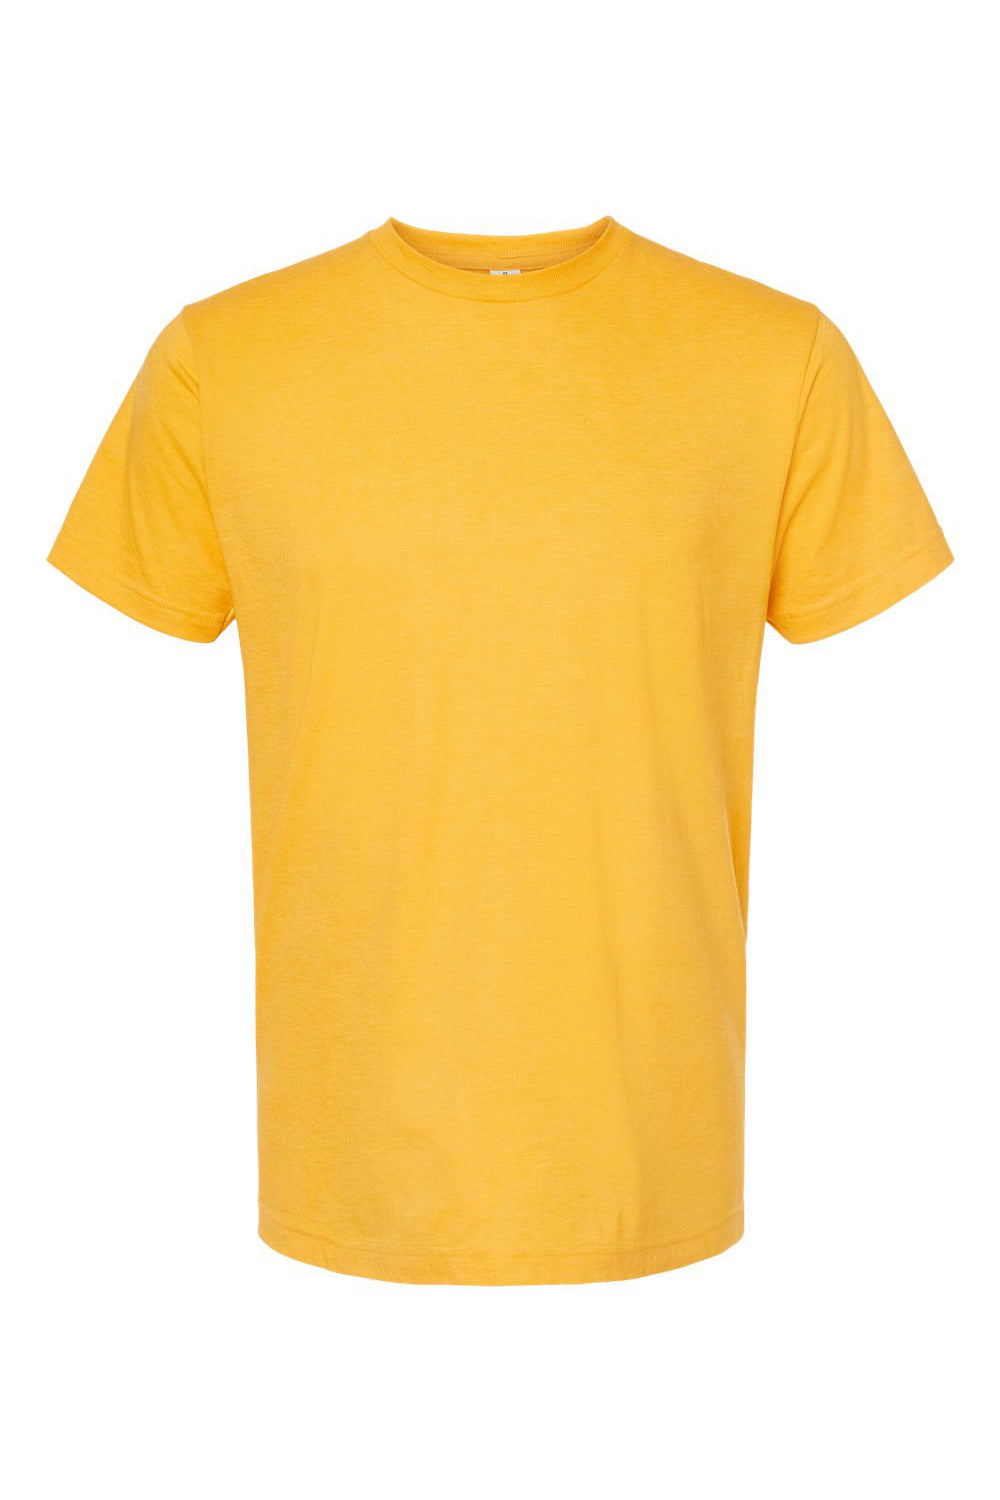 Tultex 202 Mens Fine Jersey Short Sleeve Crewneck T-Shirt Heather Mellow Yellow Flat Front